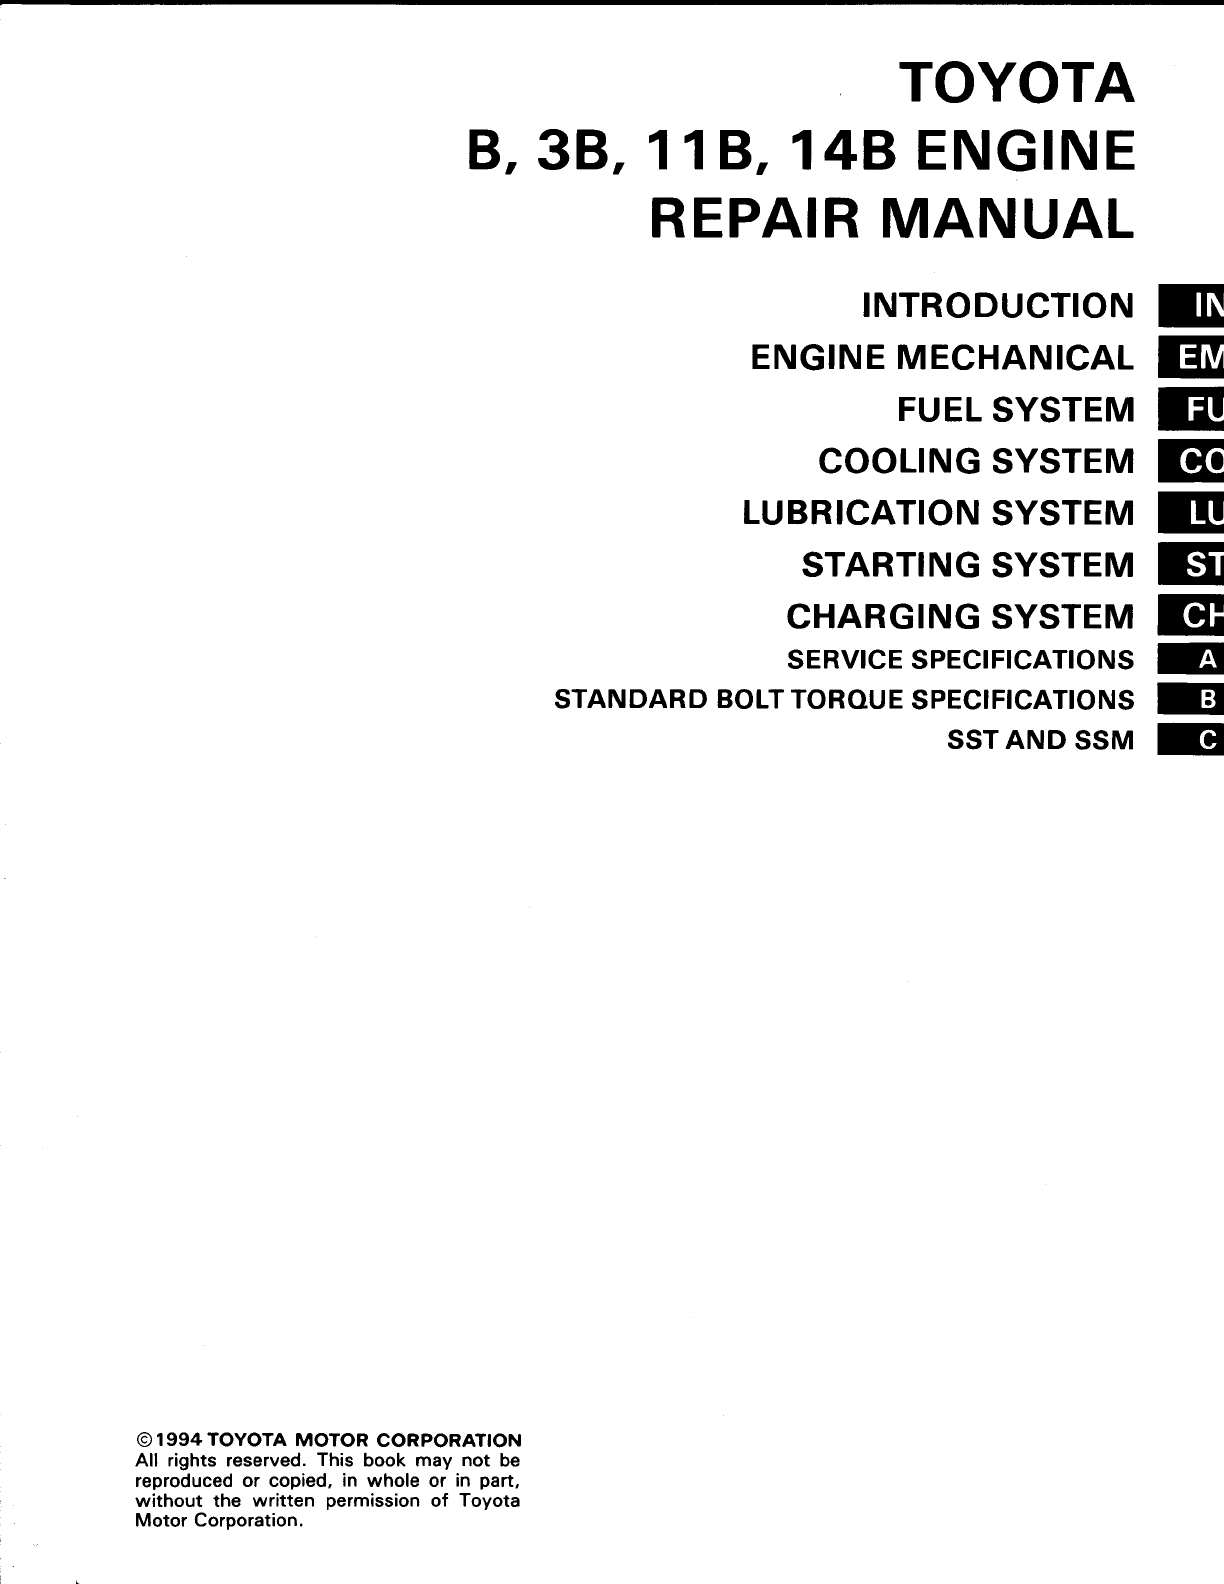 Toyota b 3b 11b 14b engine repair manual on c d